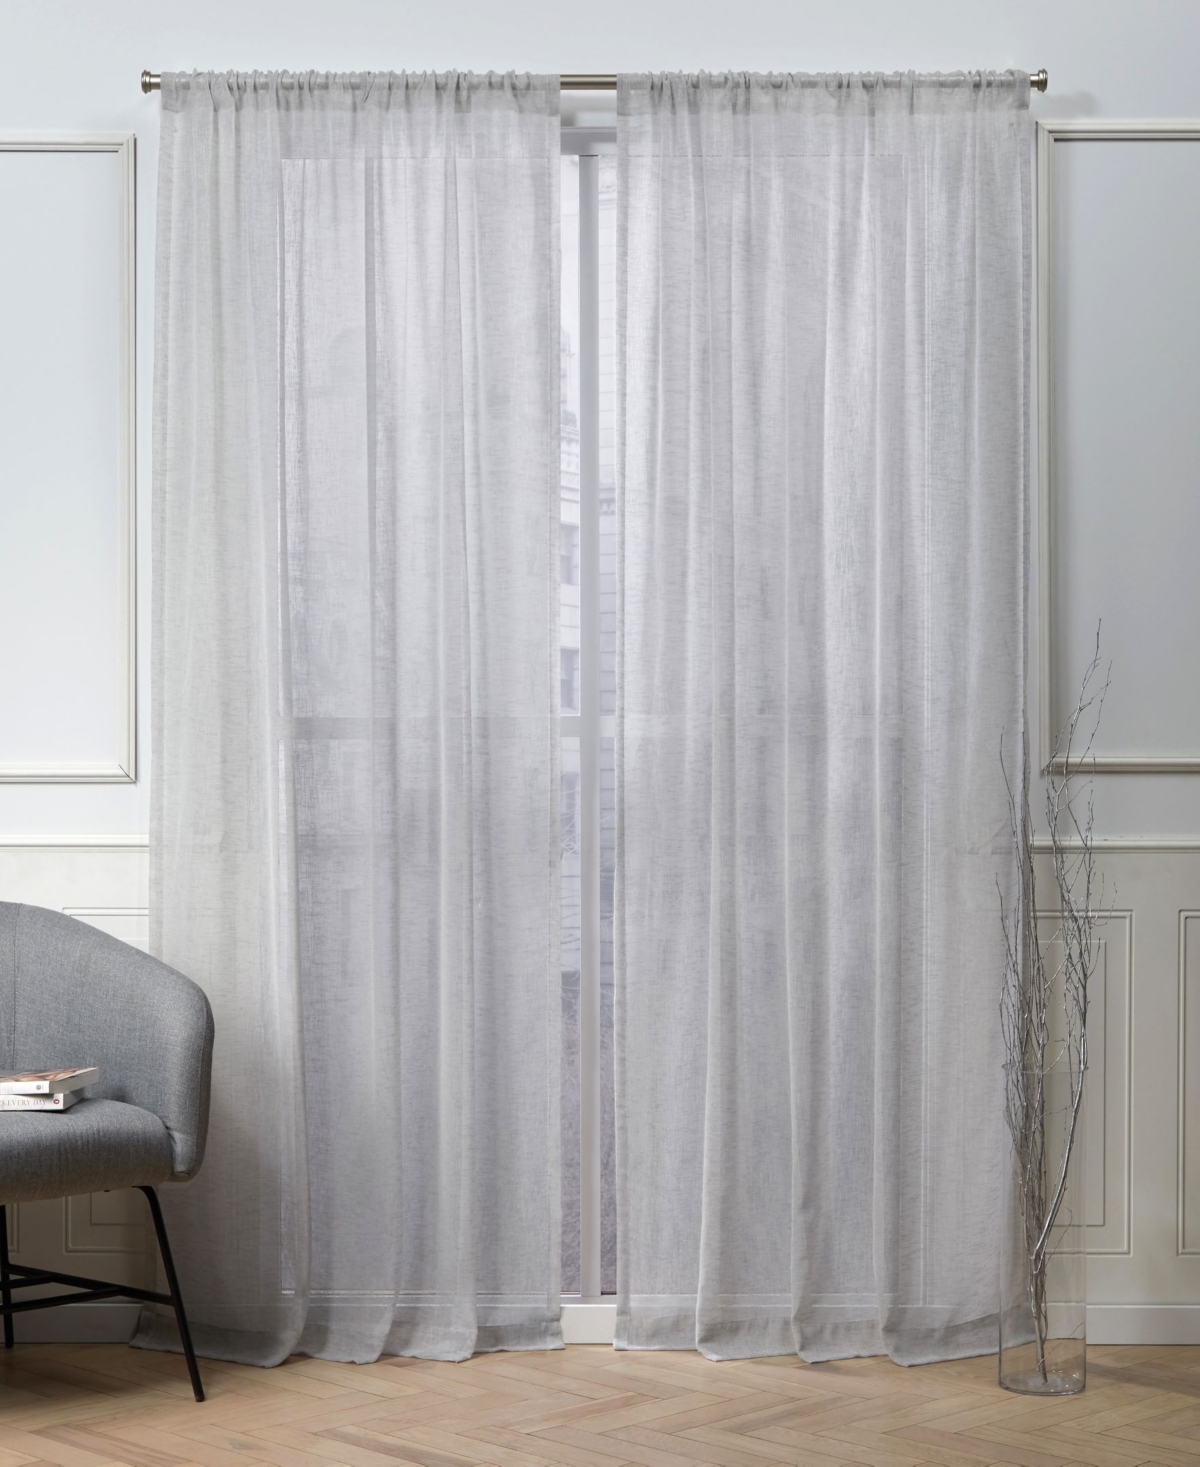 Belfry Sheer Rod Pocket Top 50" X 84" Curtain Panel Pair - Silver